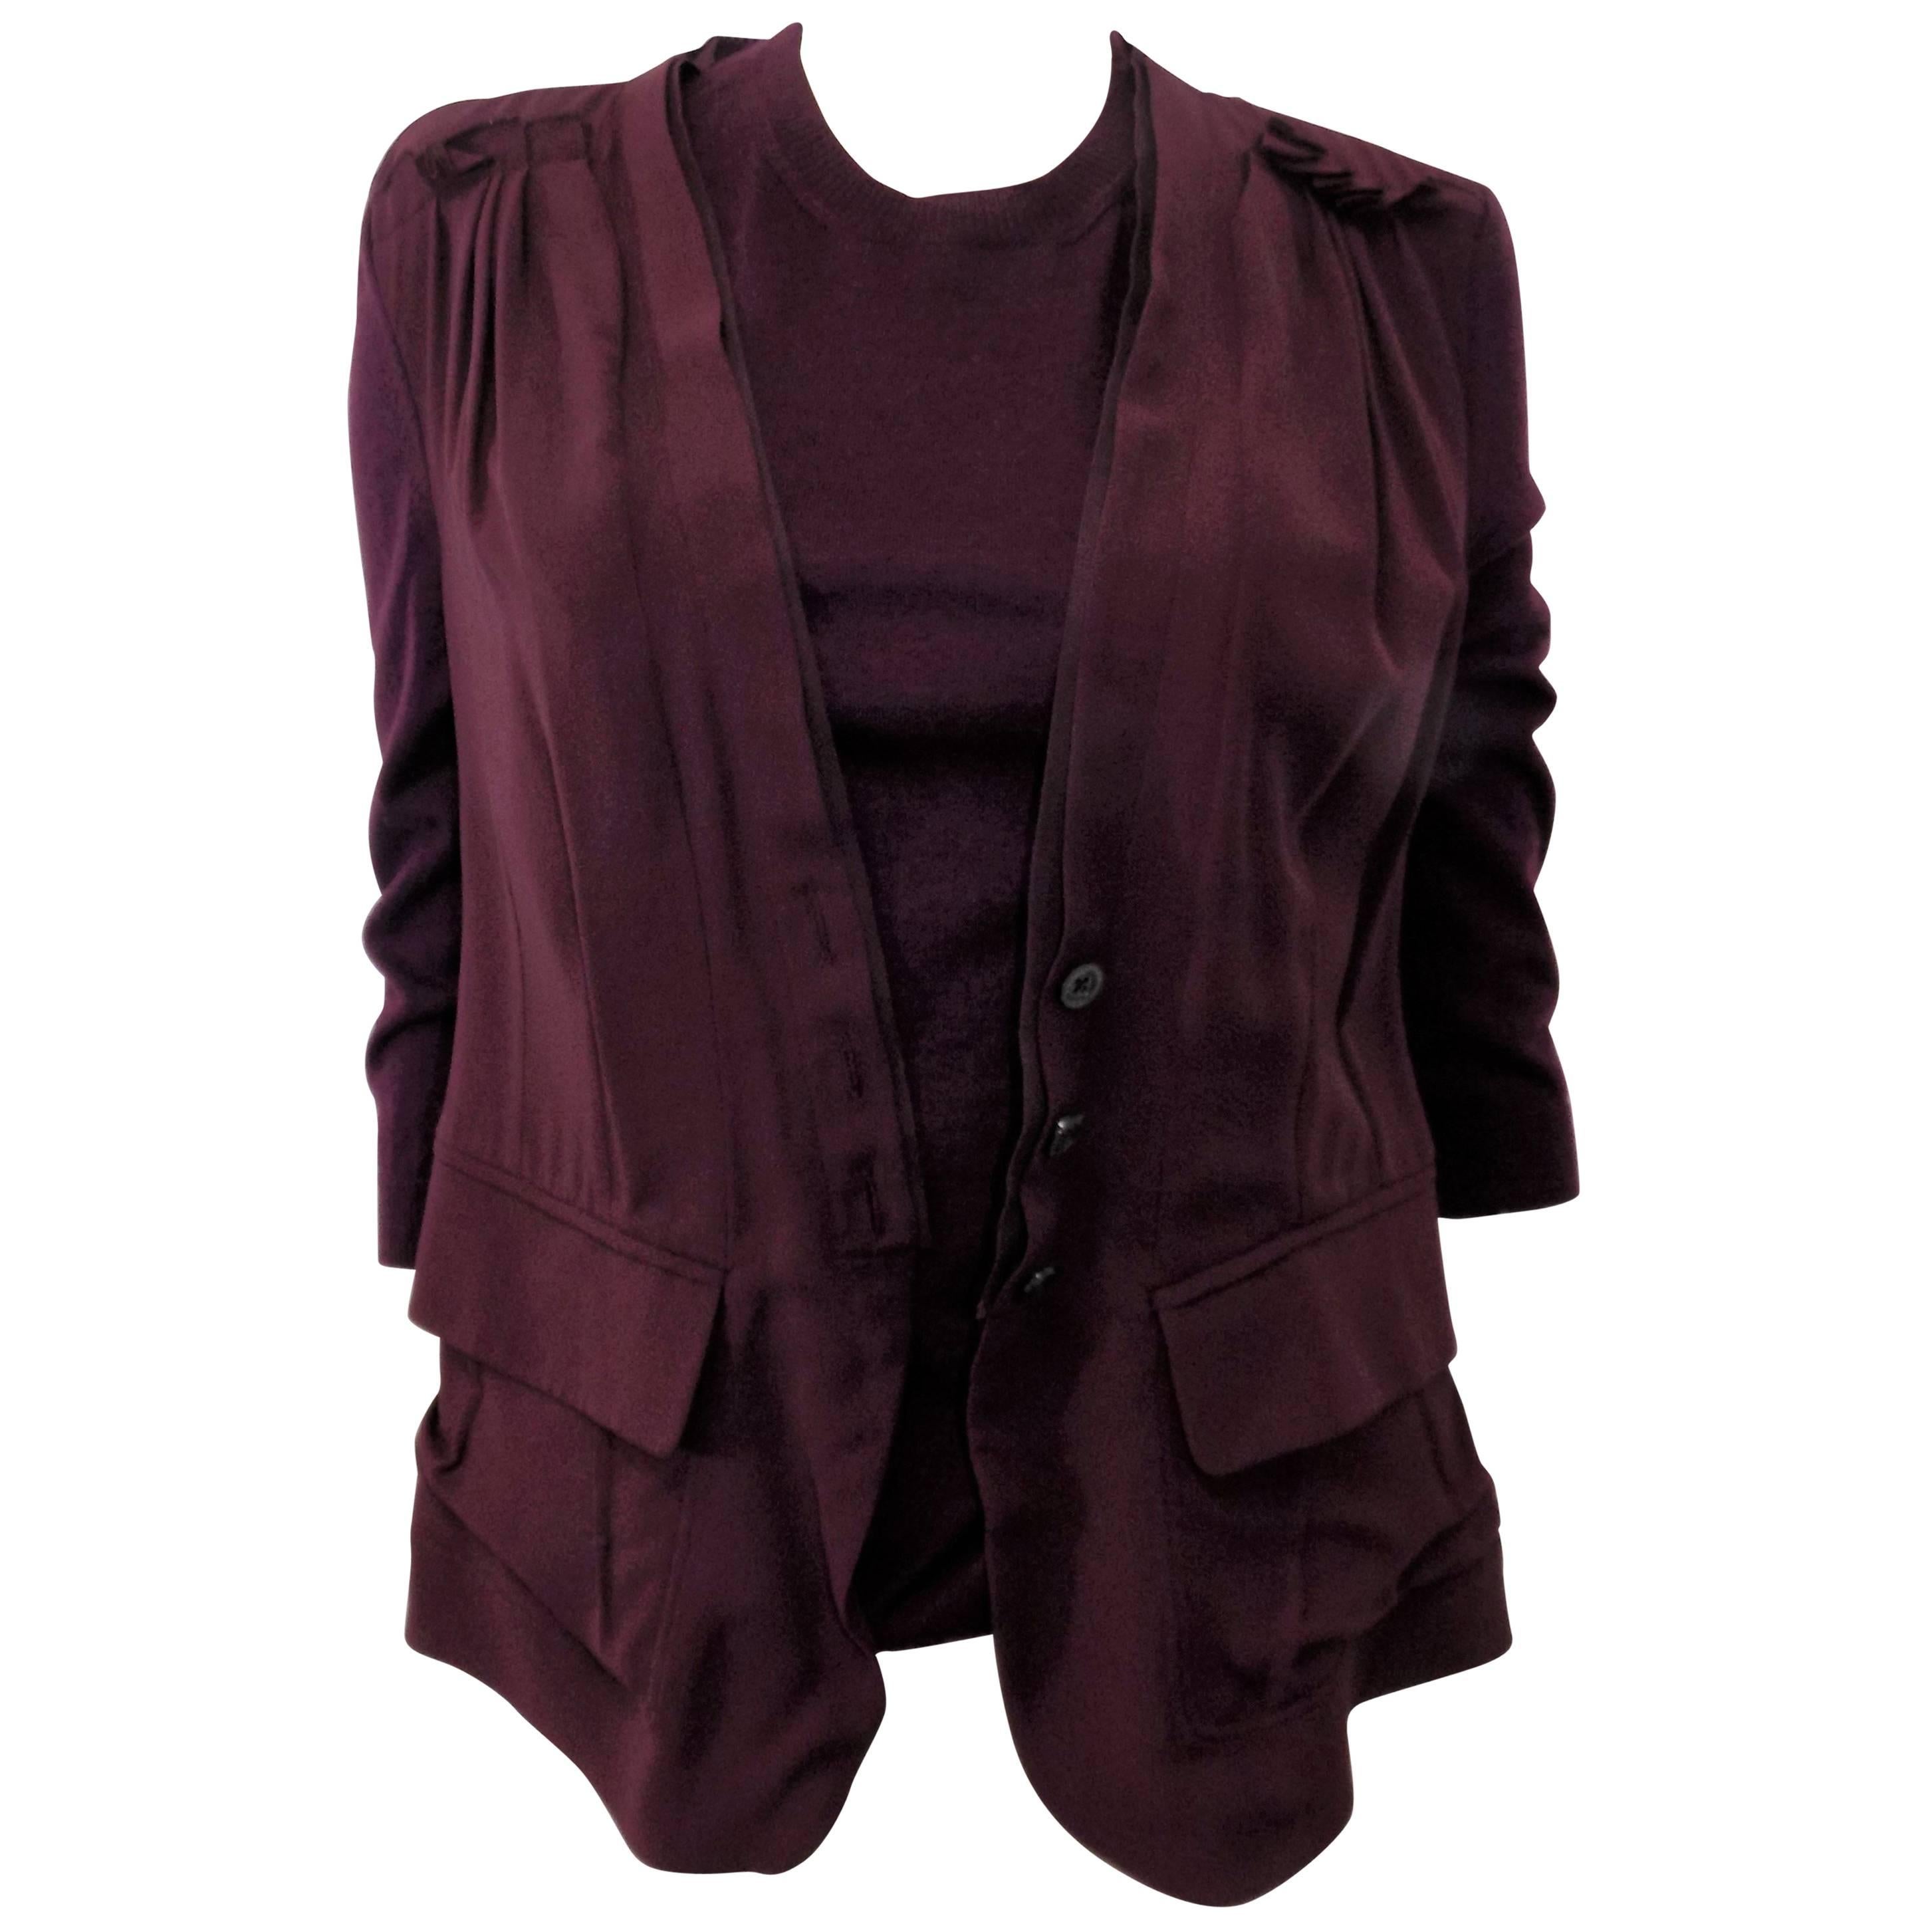 Nina Ricci silk and cashmere sweater set jaket/ top                           